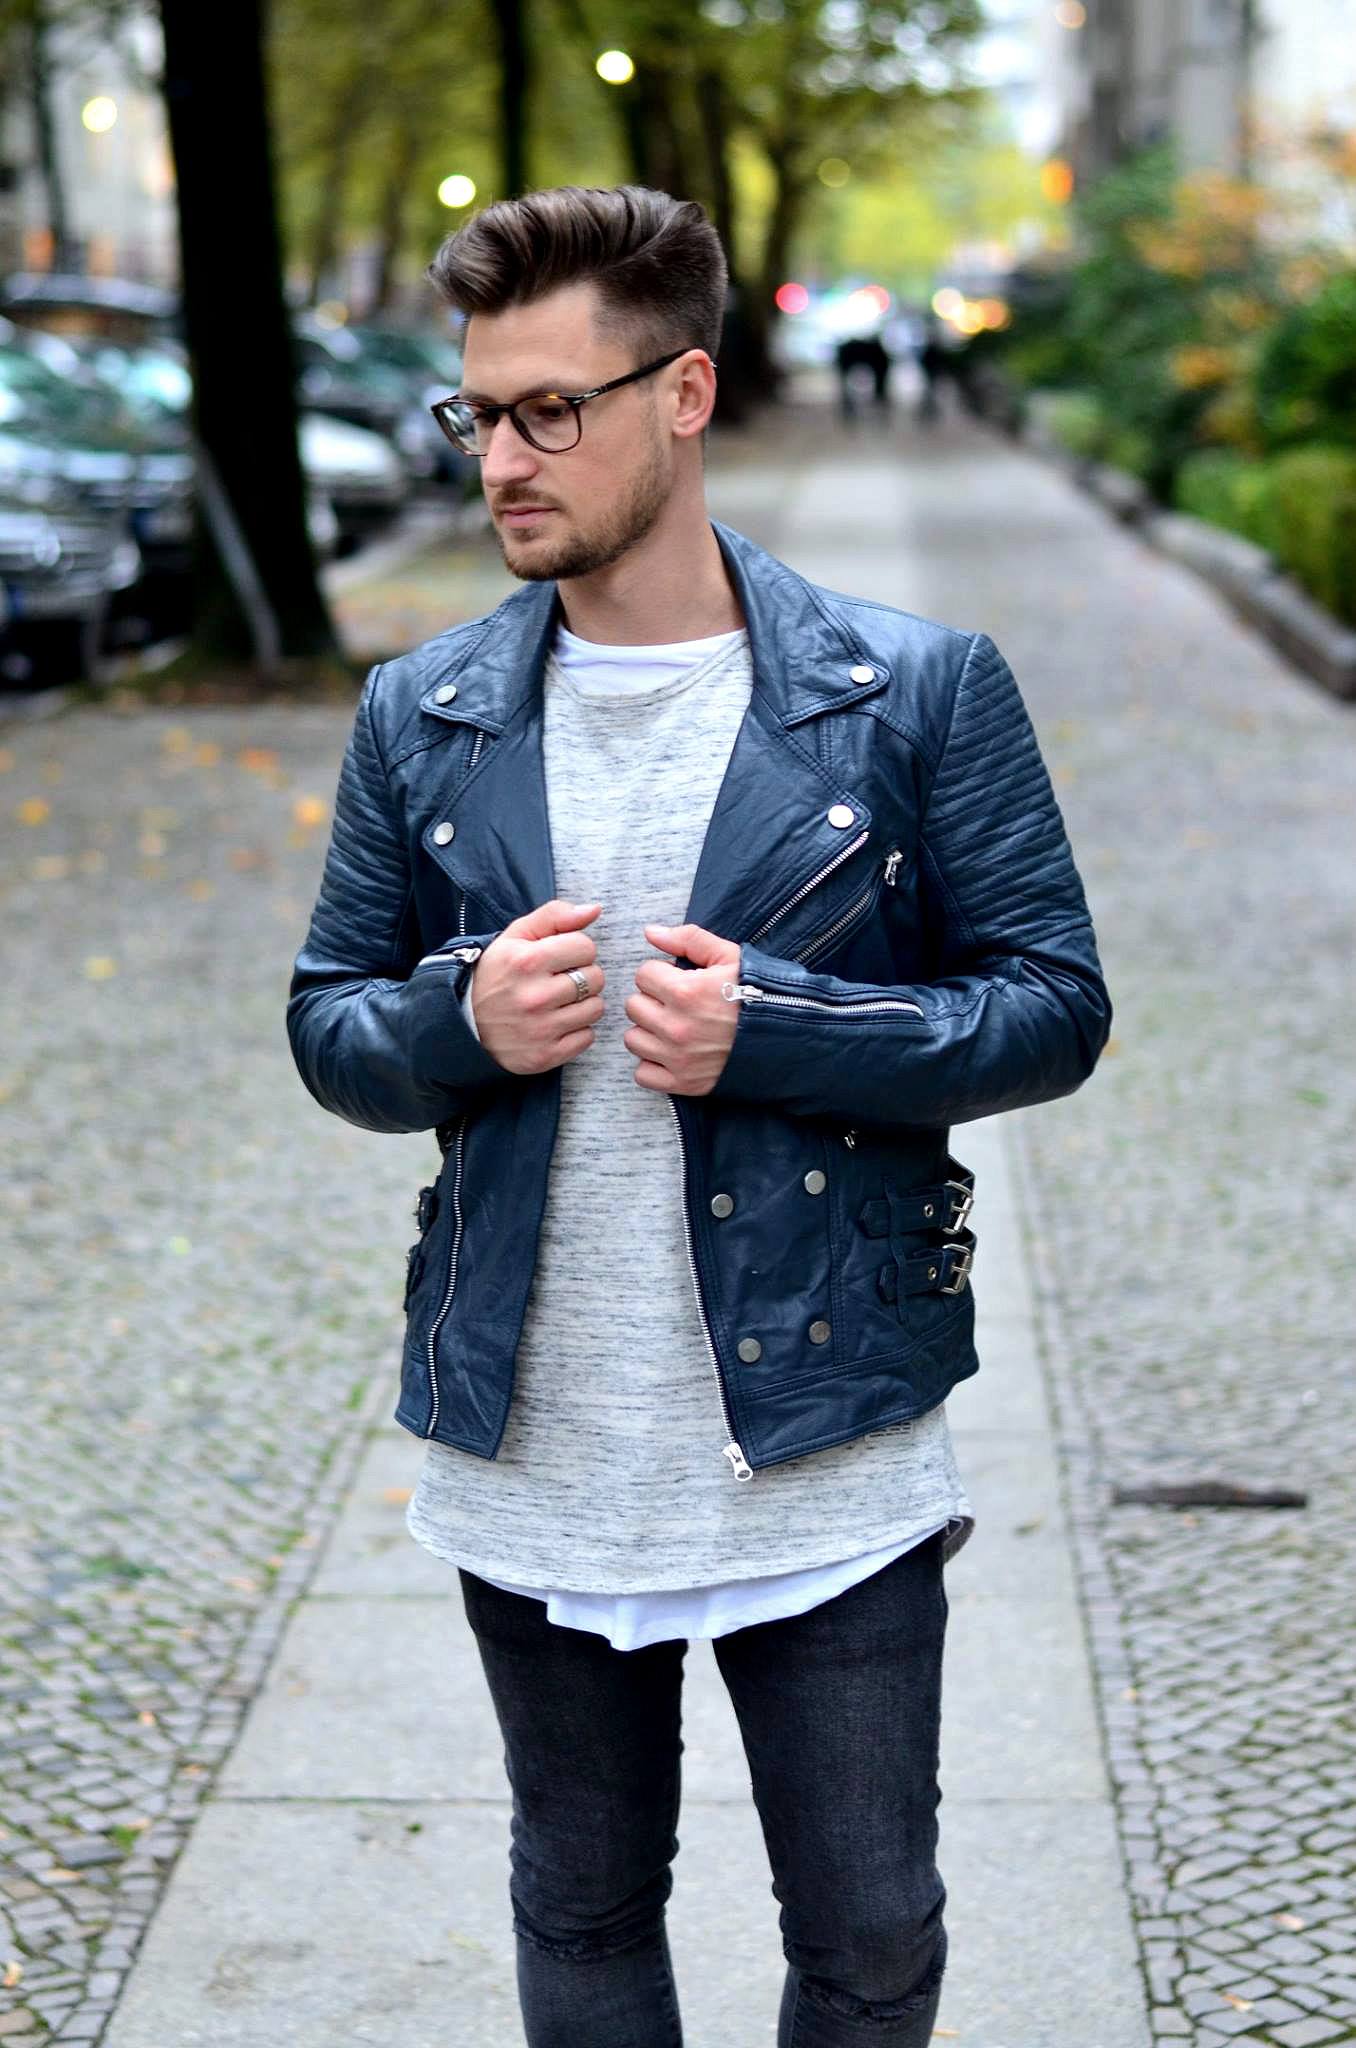 Styleblog-Männerblog-Berlin-Lederjacke-chelseaboots-streetwear-männermode